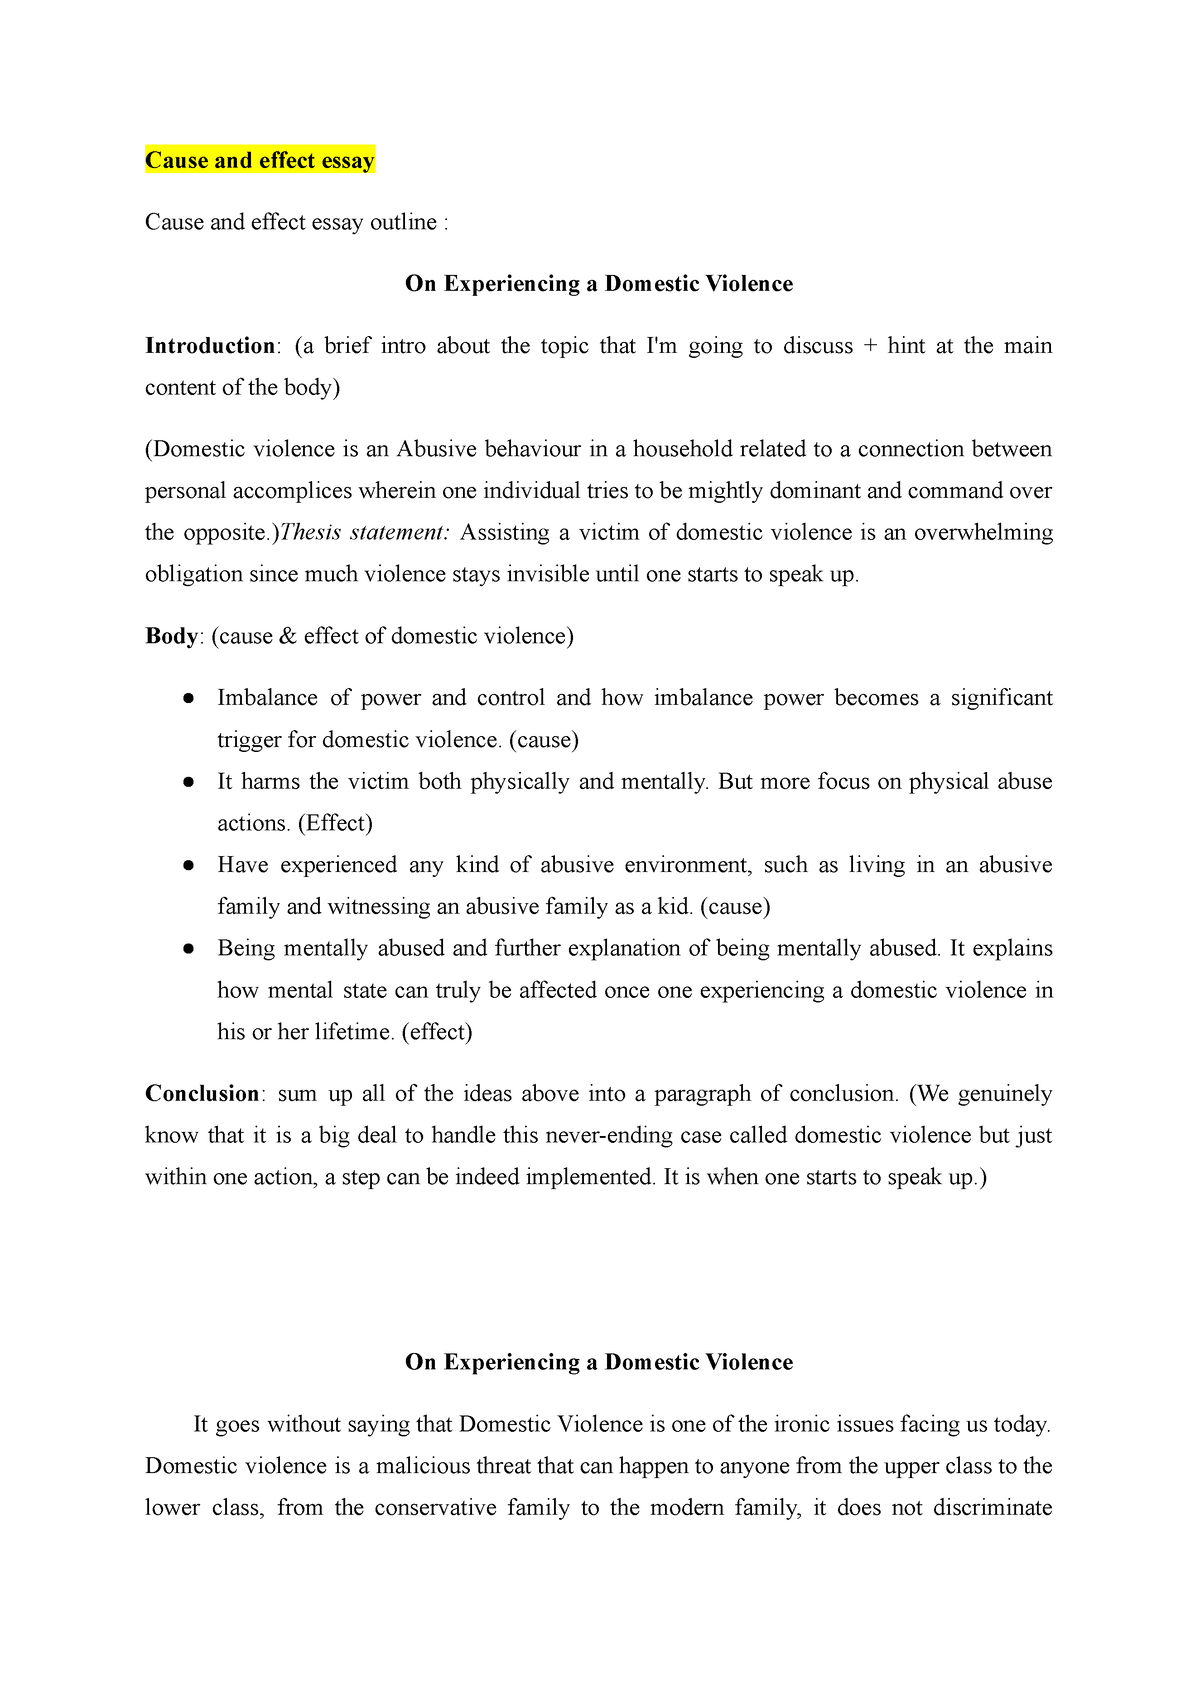 dissertation paper on domestic violence